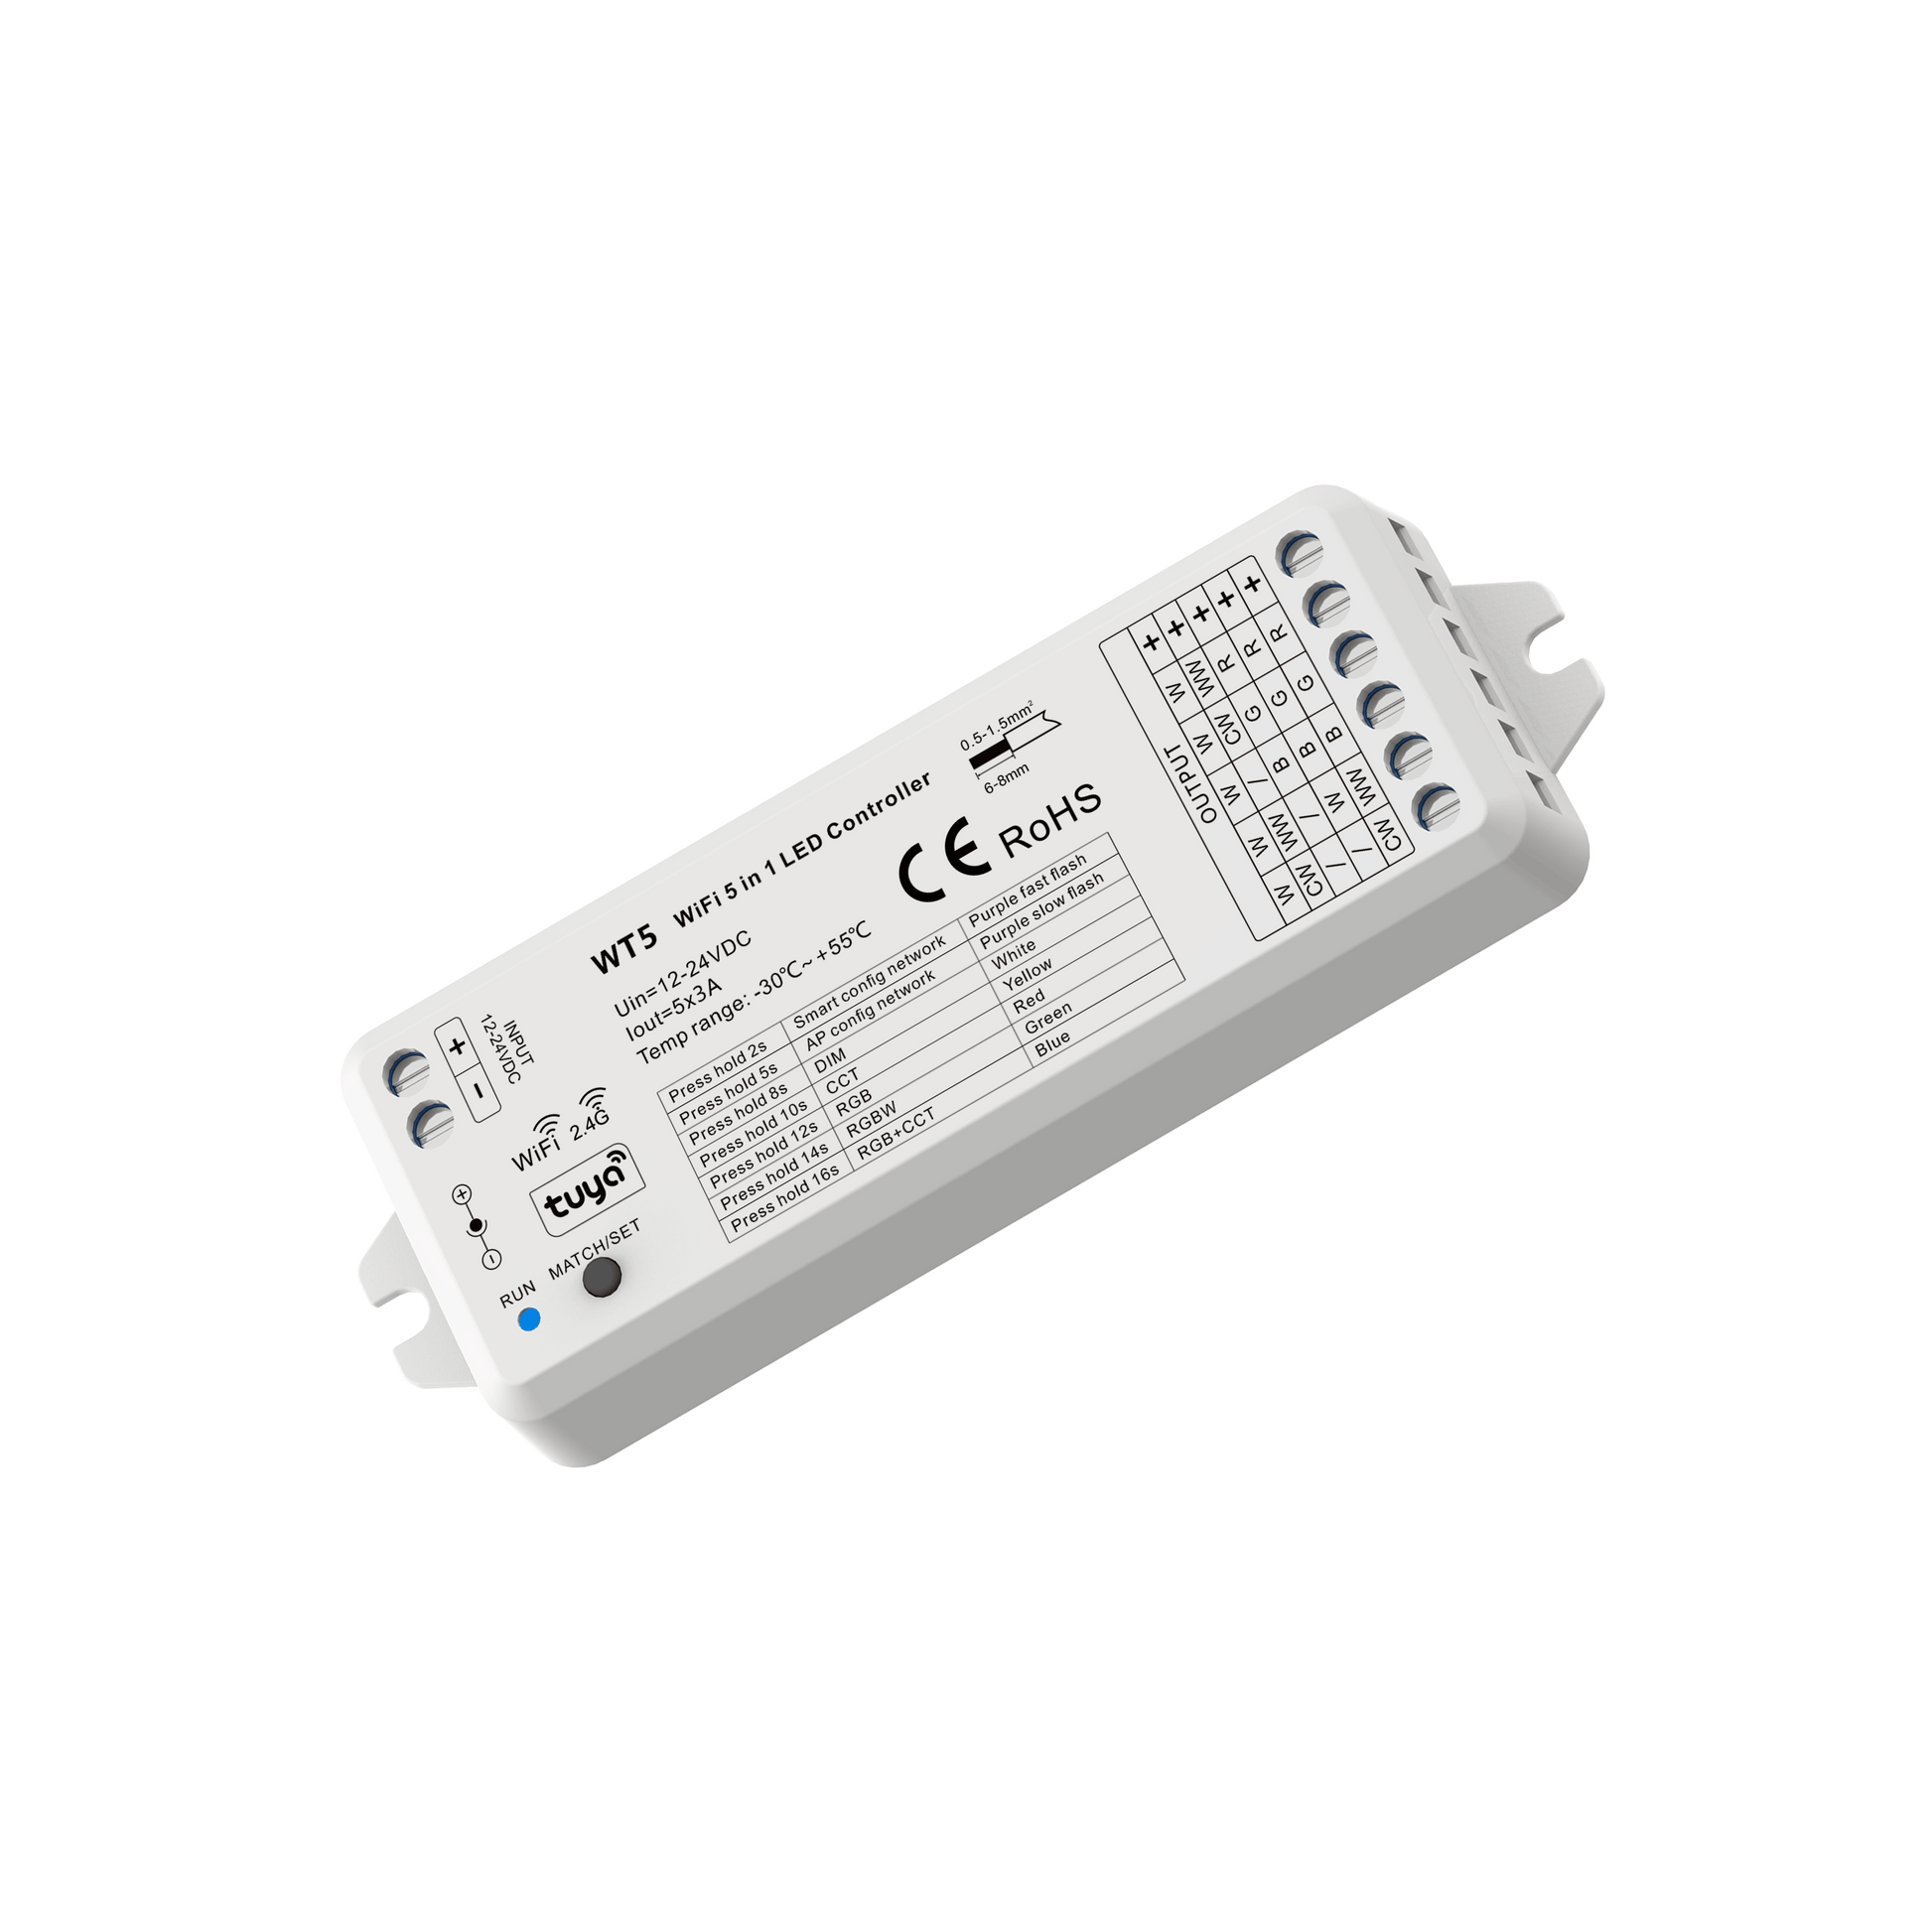 WT5 5CH multi LED light source smart wireless LED controller receiver. Works with 12V-24V LED tape or LED light sources.